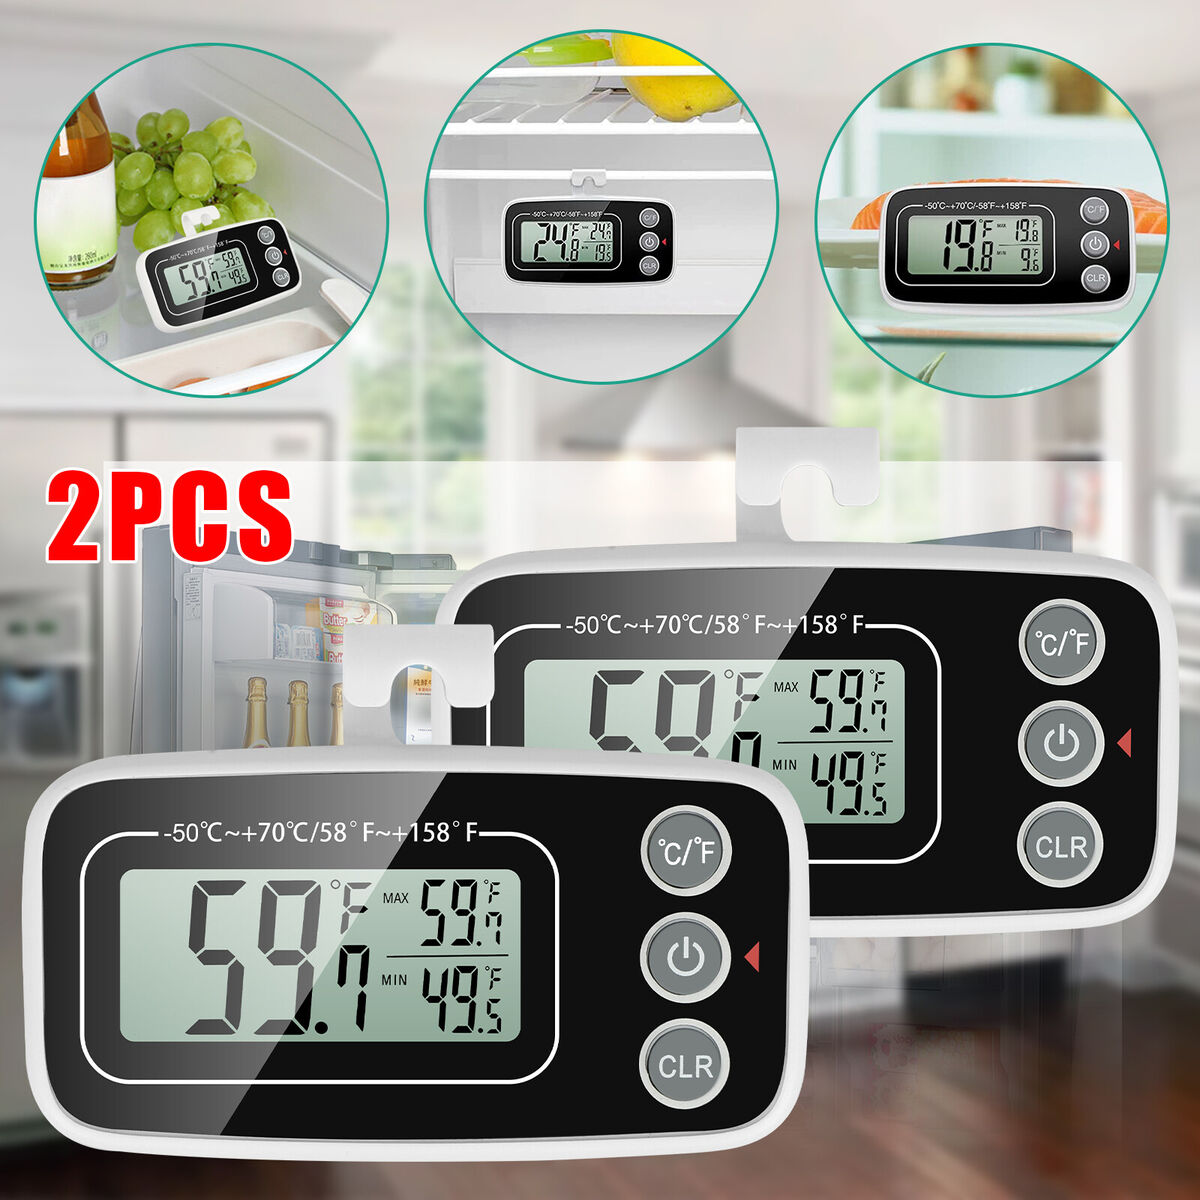 2PCS LCD Display Refrigerator Thermometer Digital Fridge Freezer Waterproof  Gift